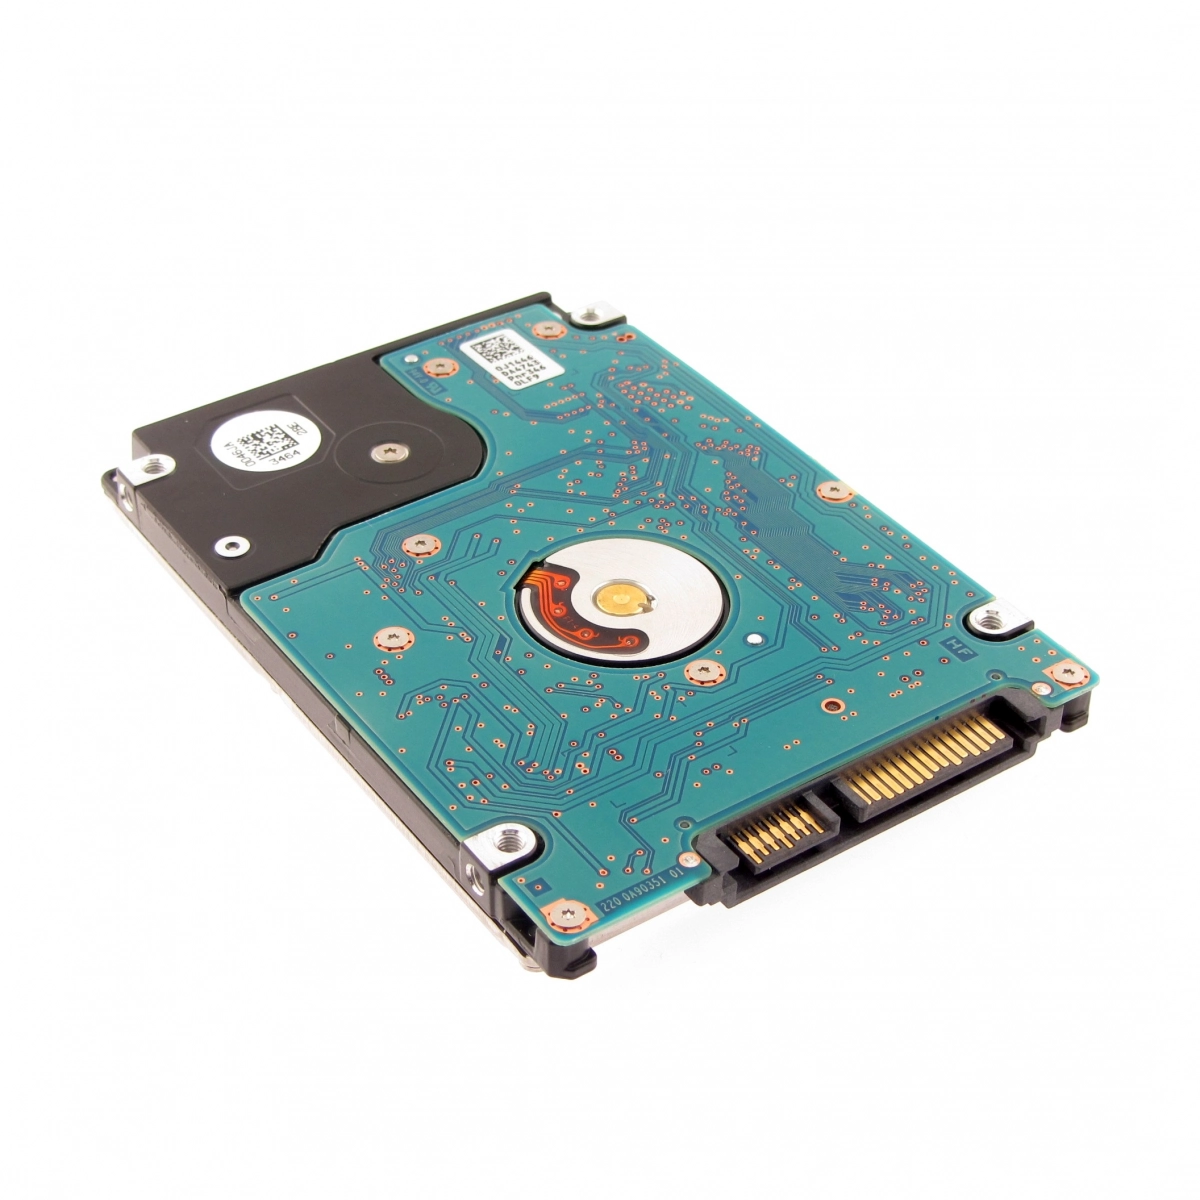 Notebook-Festplatte 1TB, 7mm, 7200rpm, 128MB für HP ProBook 650 G1